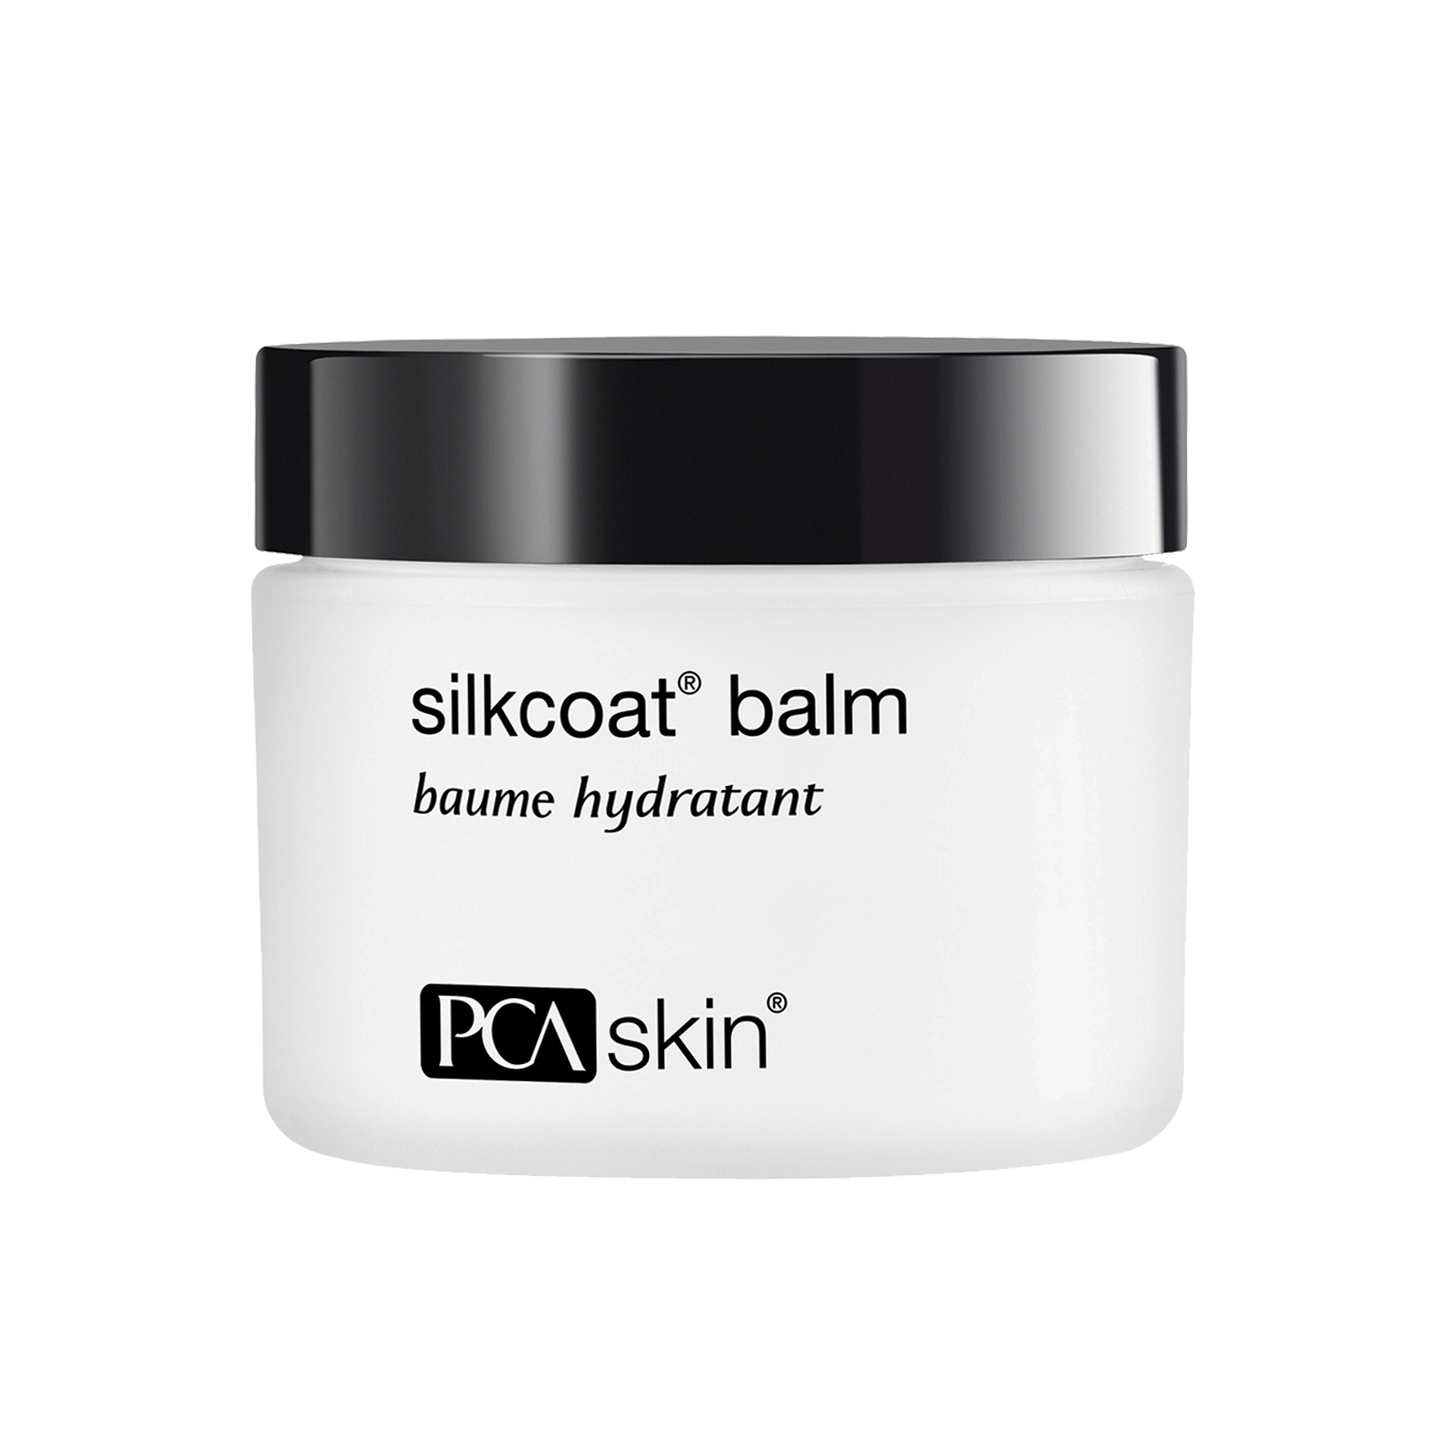 PCA SKIN Silkcoat Balm 1.7 FL.OZ/50.27mL